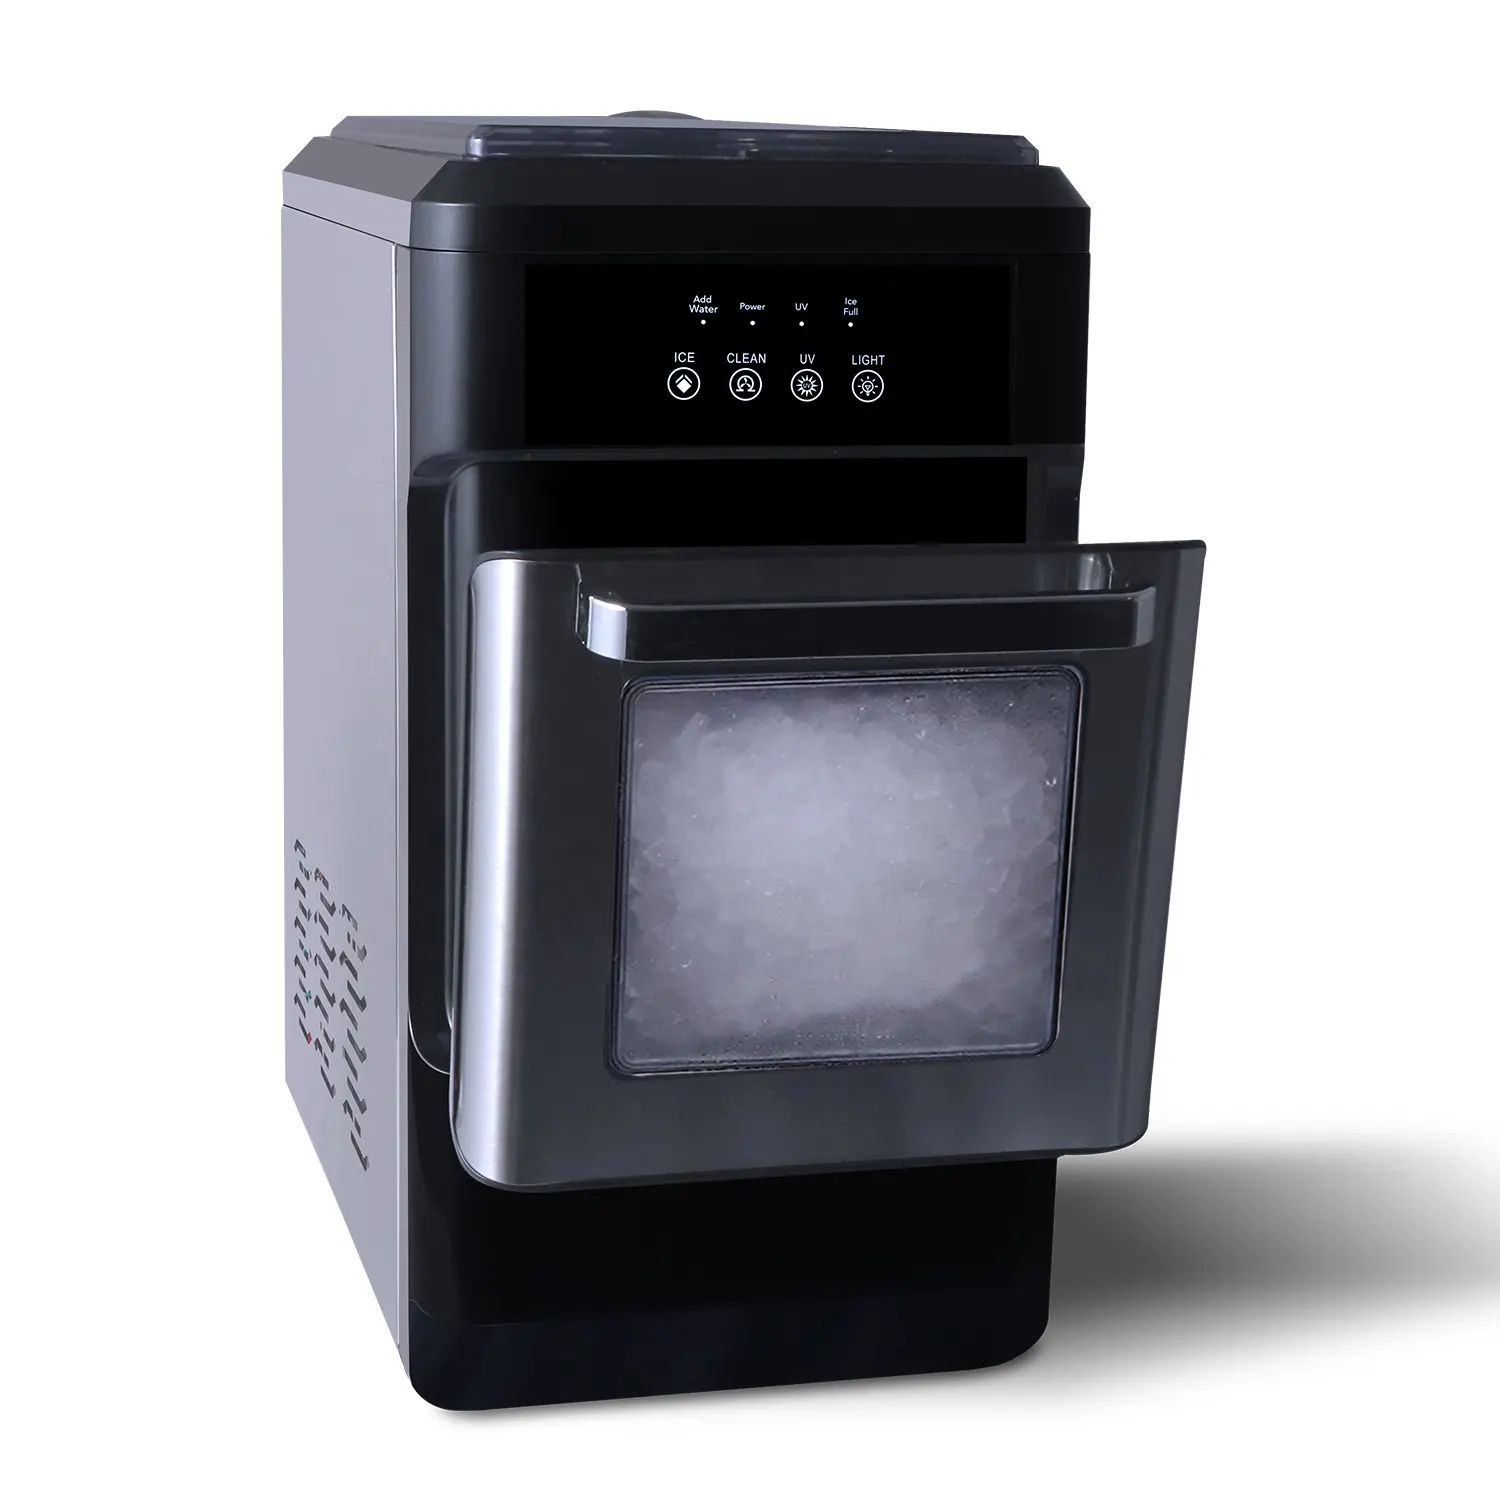 Hicon new design ice maker automatic nugget ice maker countertop home 110 - 240V CE,CB,ETL,ROHS